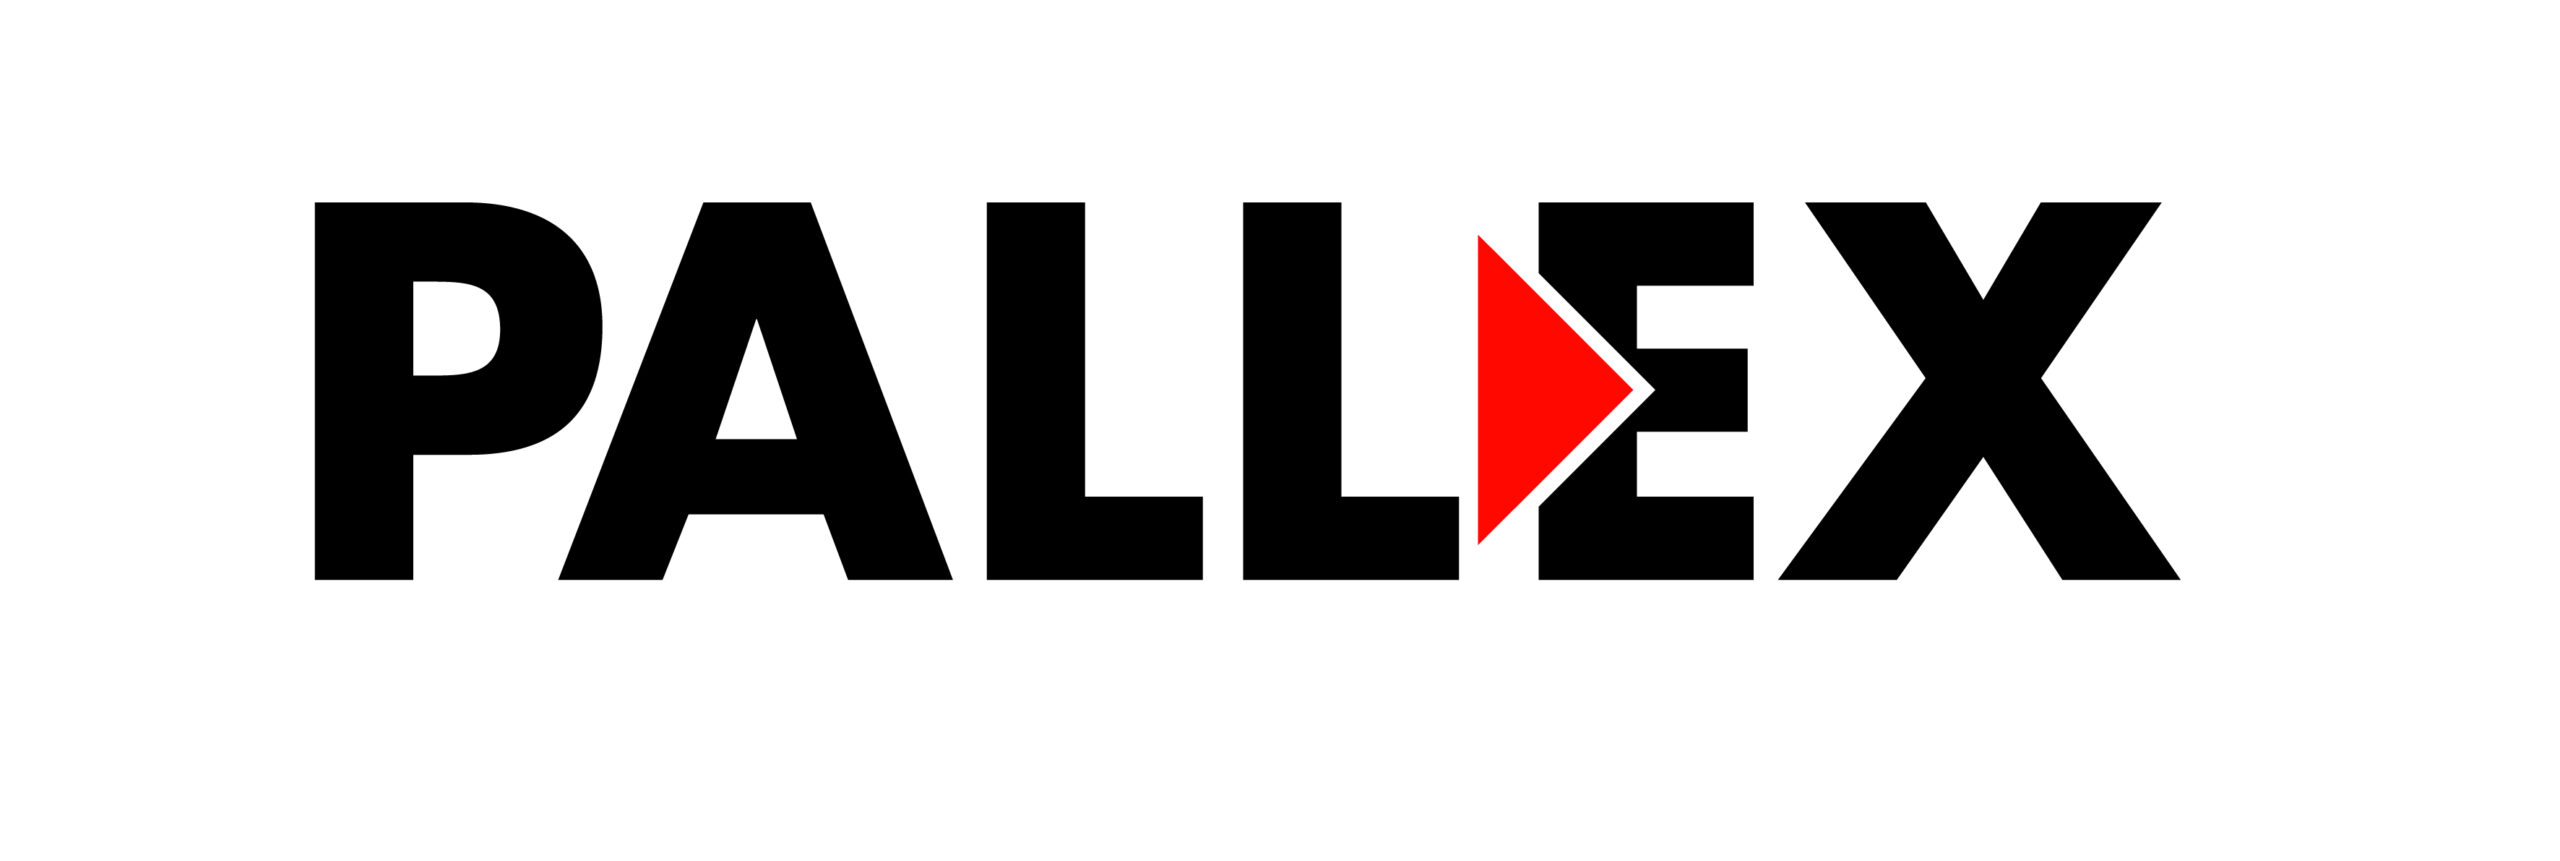 Pall-Ex-logo-scaled.jpg